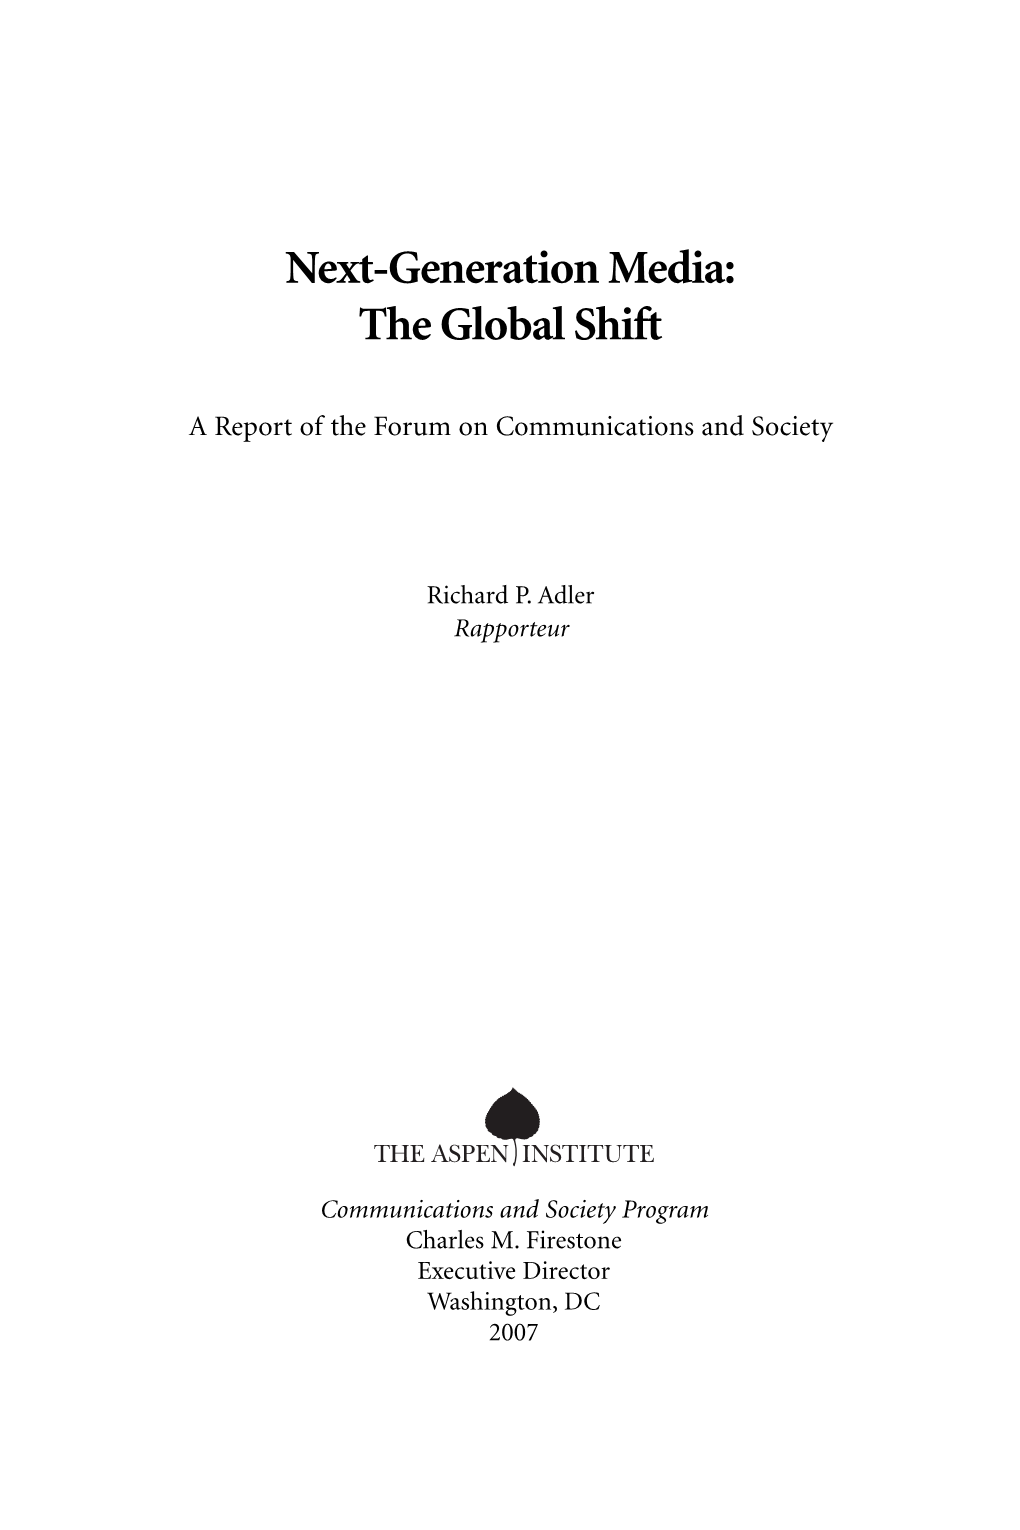 Next Generation Media: the Global Shift